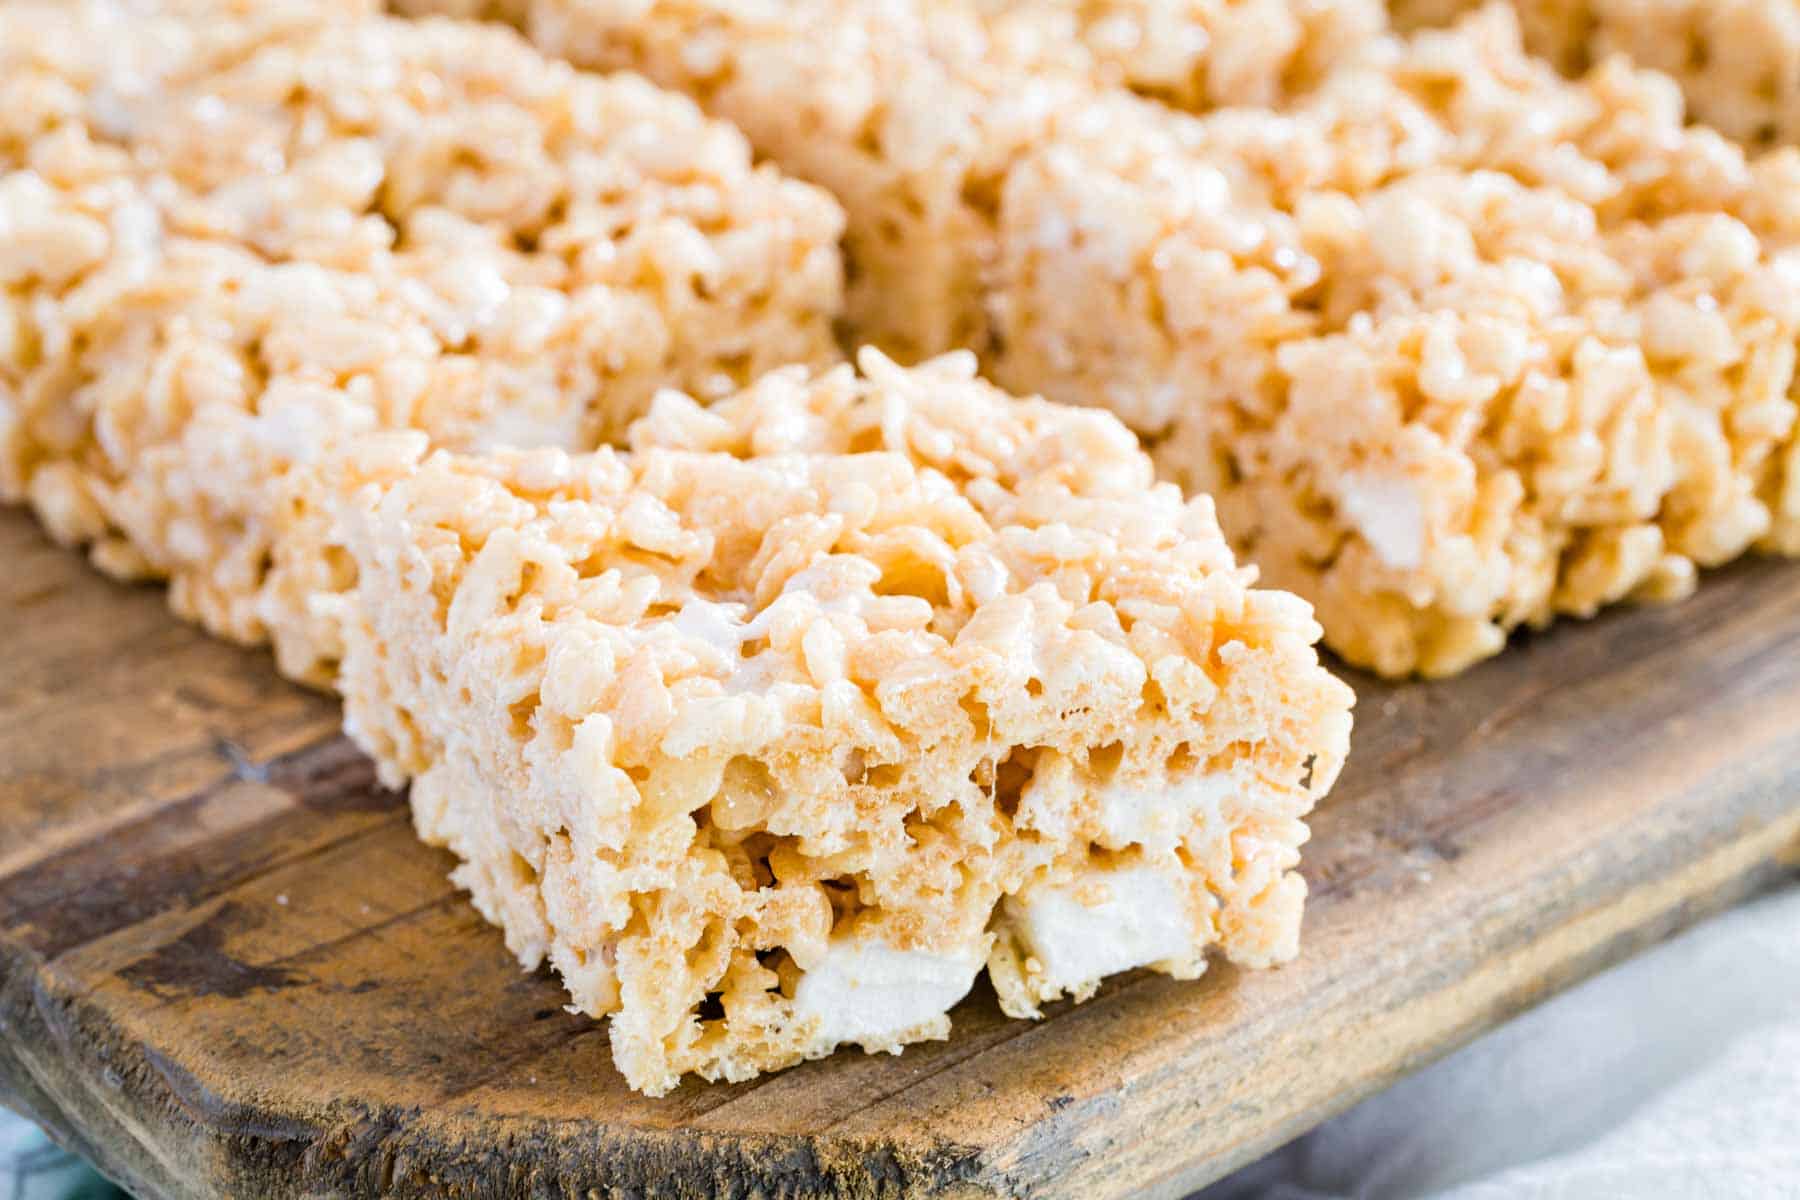 Gluten-free rice krispies treats on a wooden platter.